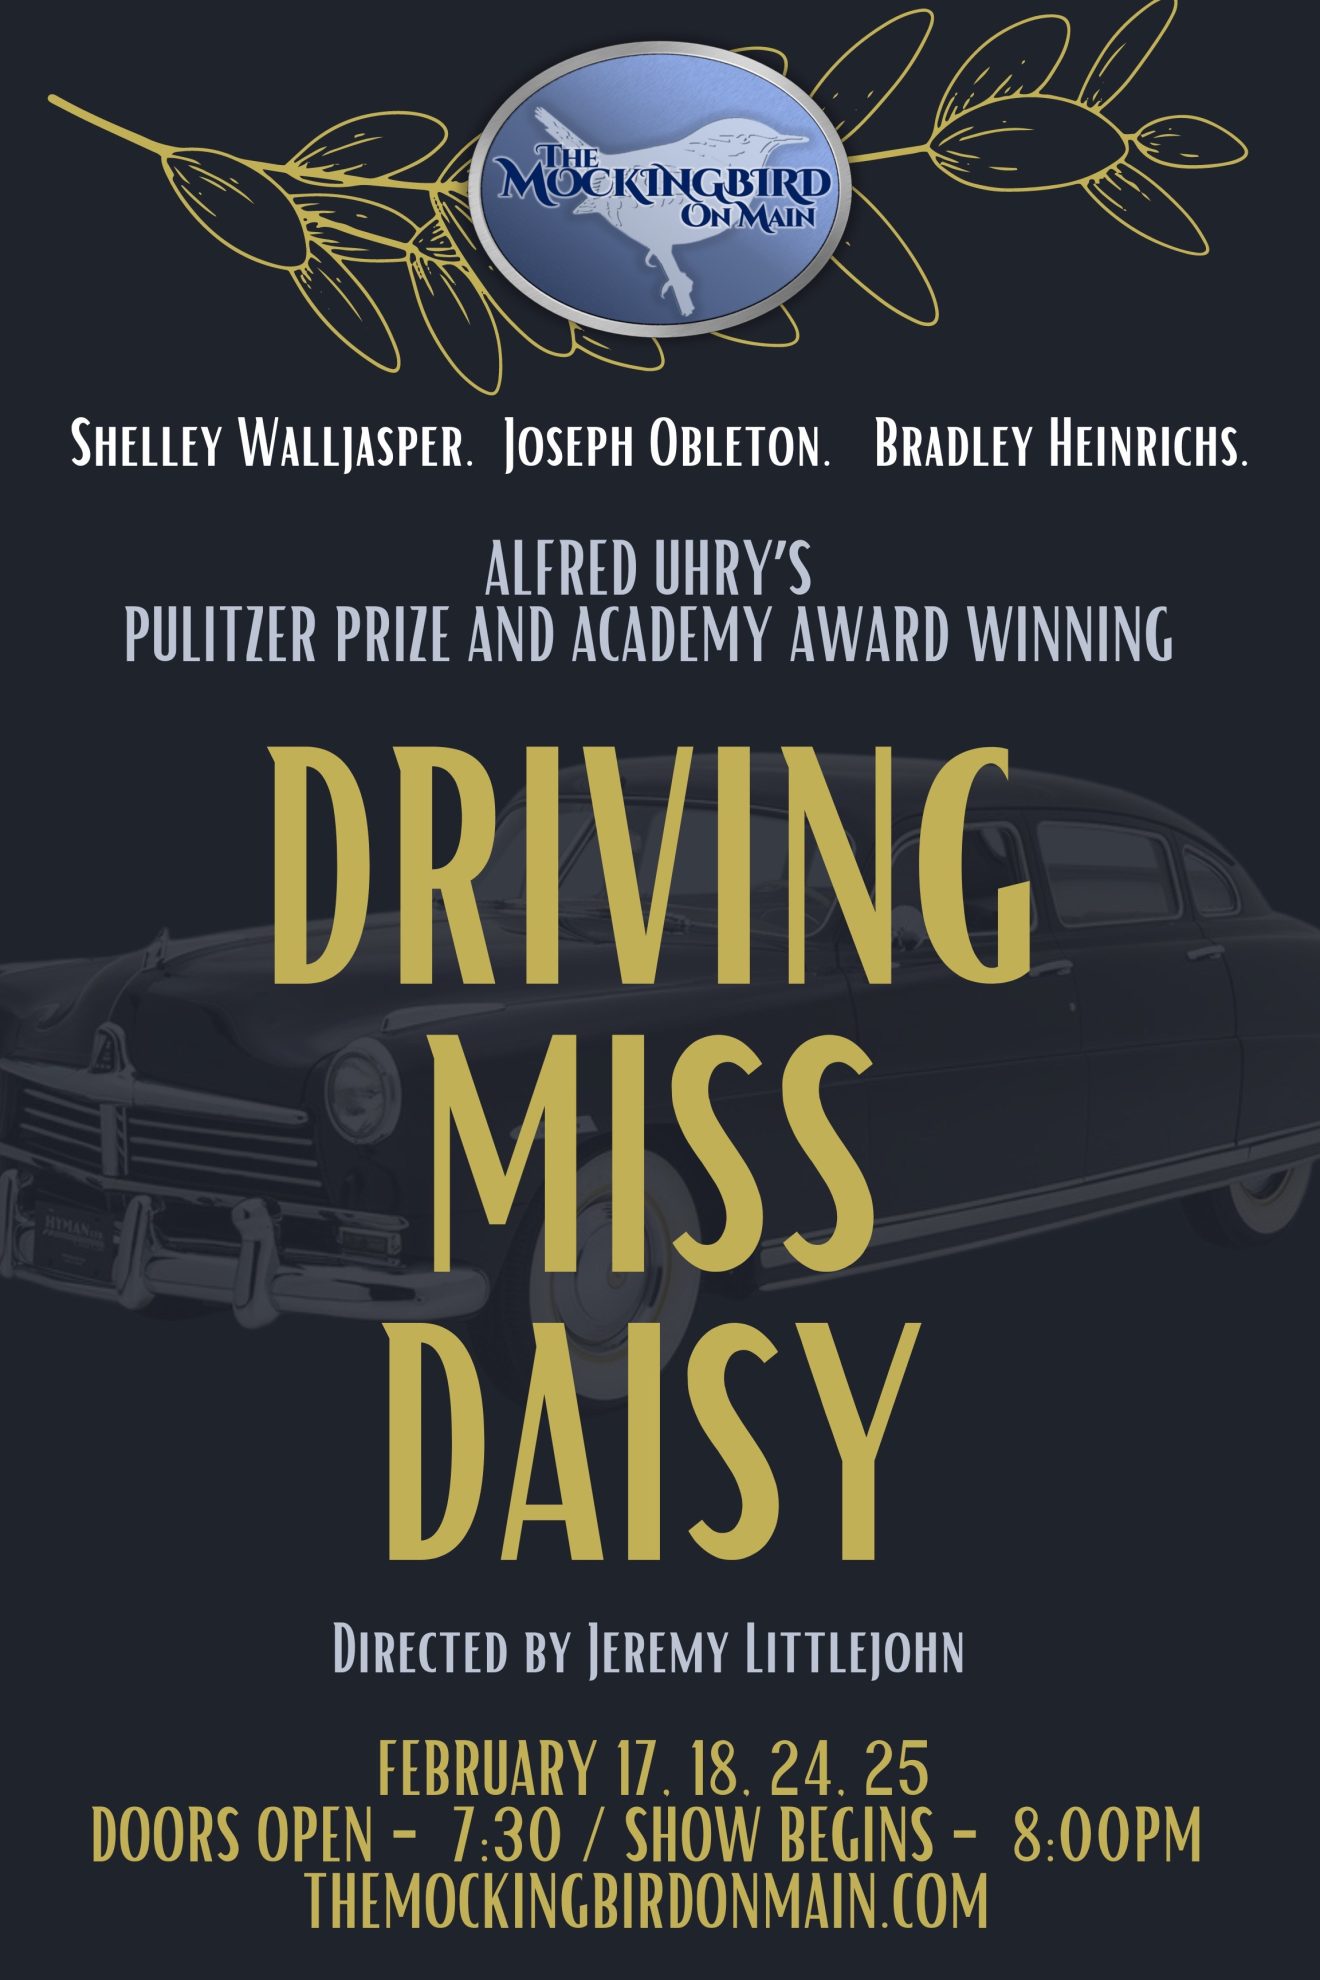 Mockingbird On Main Opens 'Driving Miss Daisy' This Week